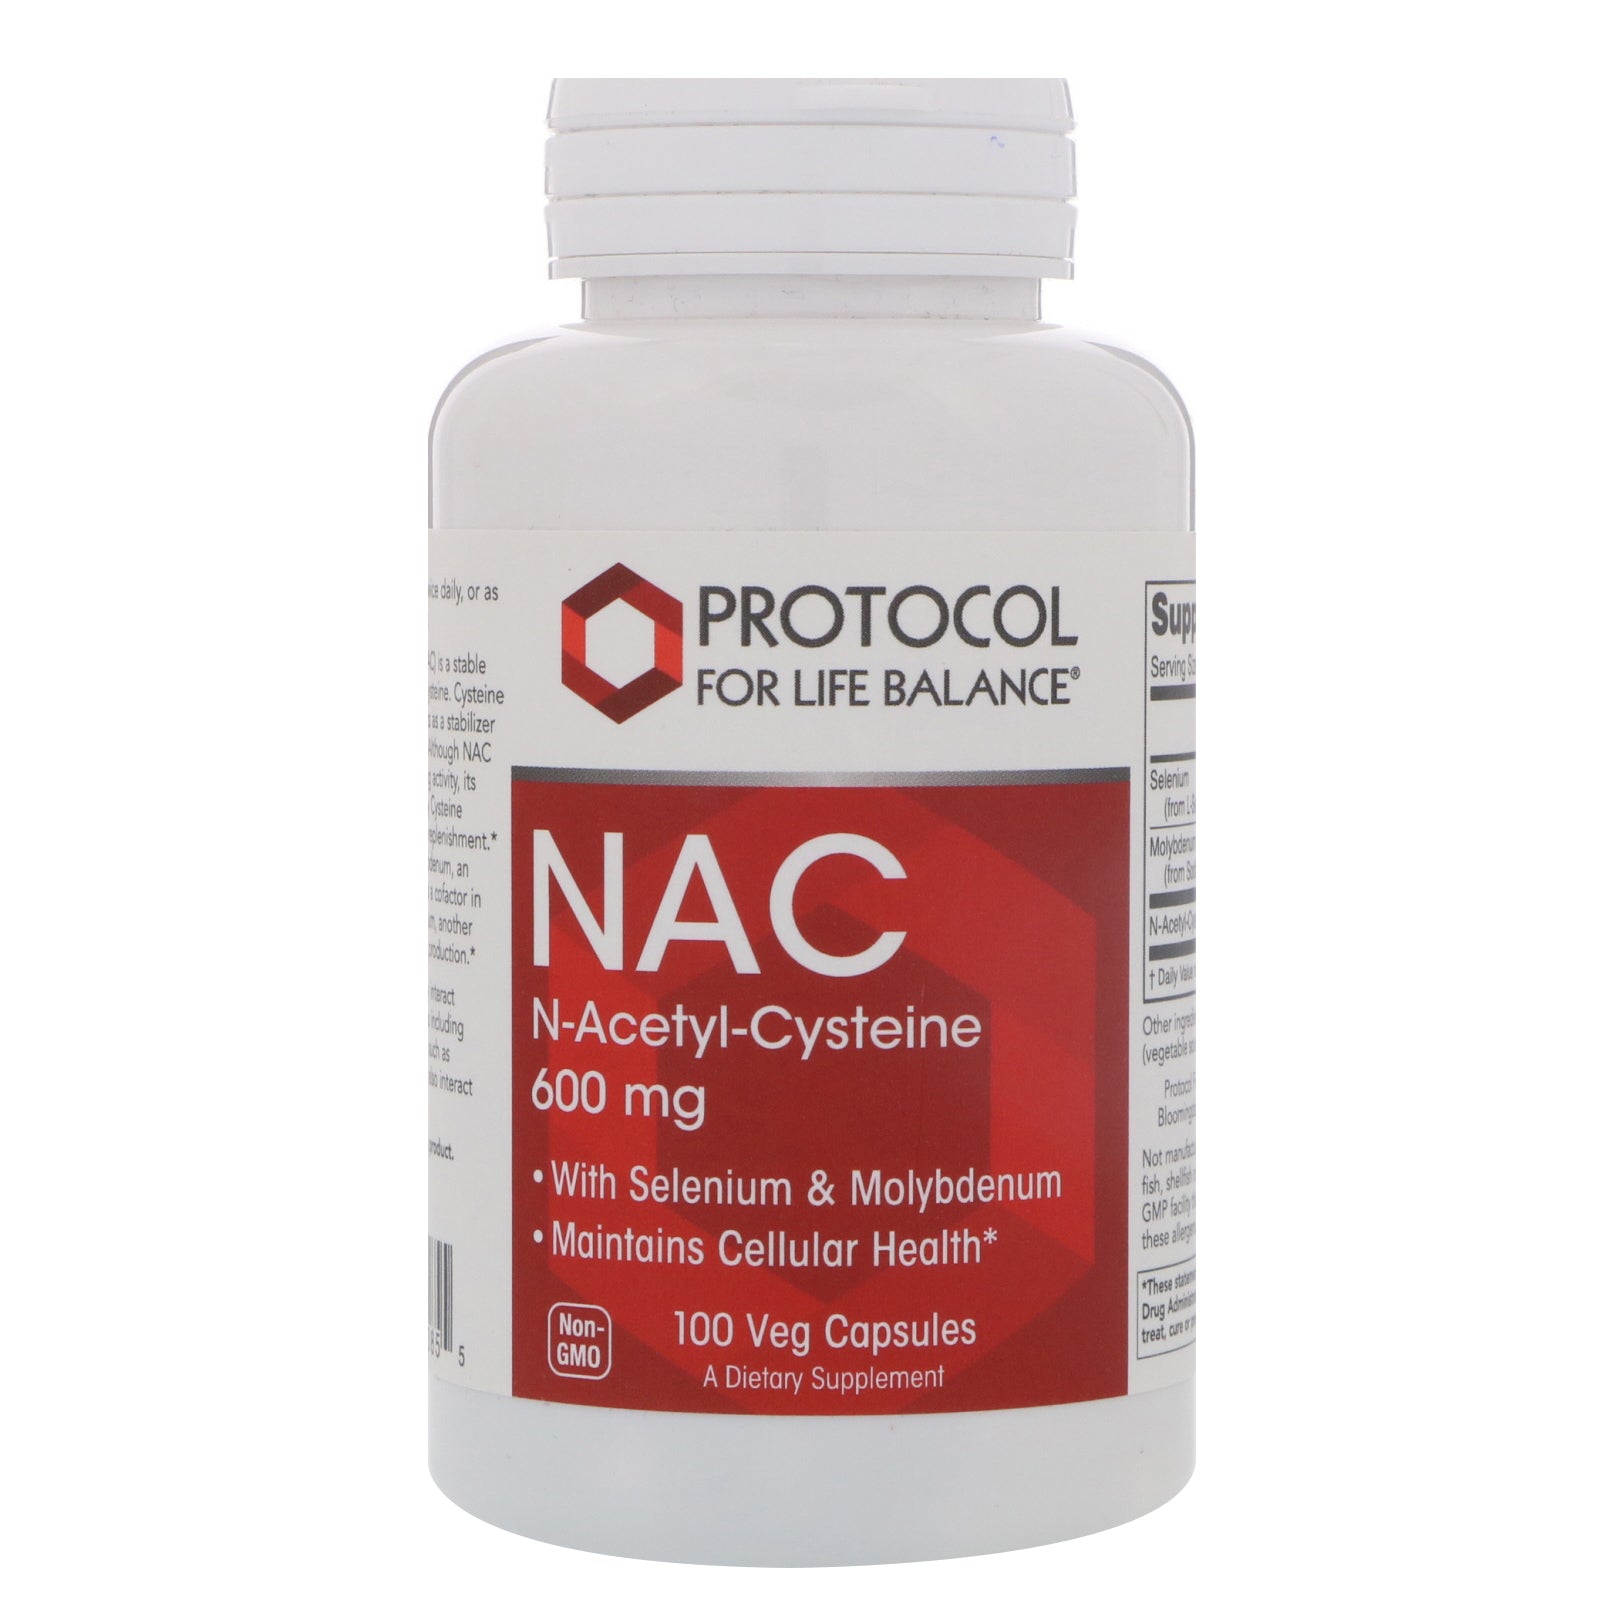 Protocol for Life Balance, NAC N-Acetyl-Cysteine, 600 mg Veg Capsules